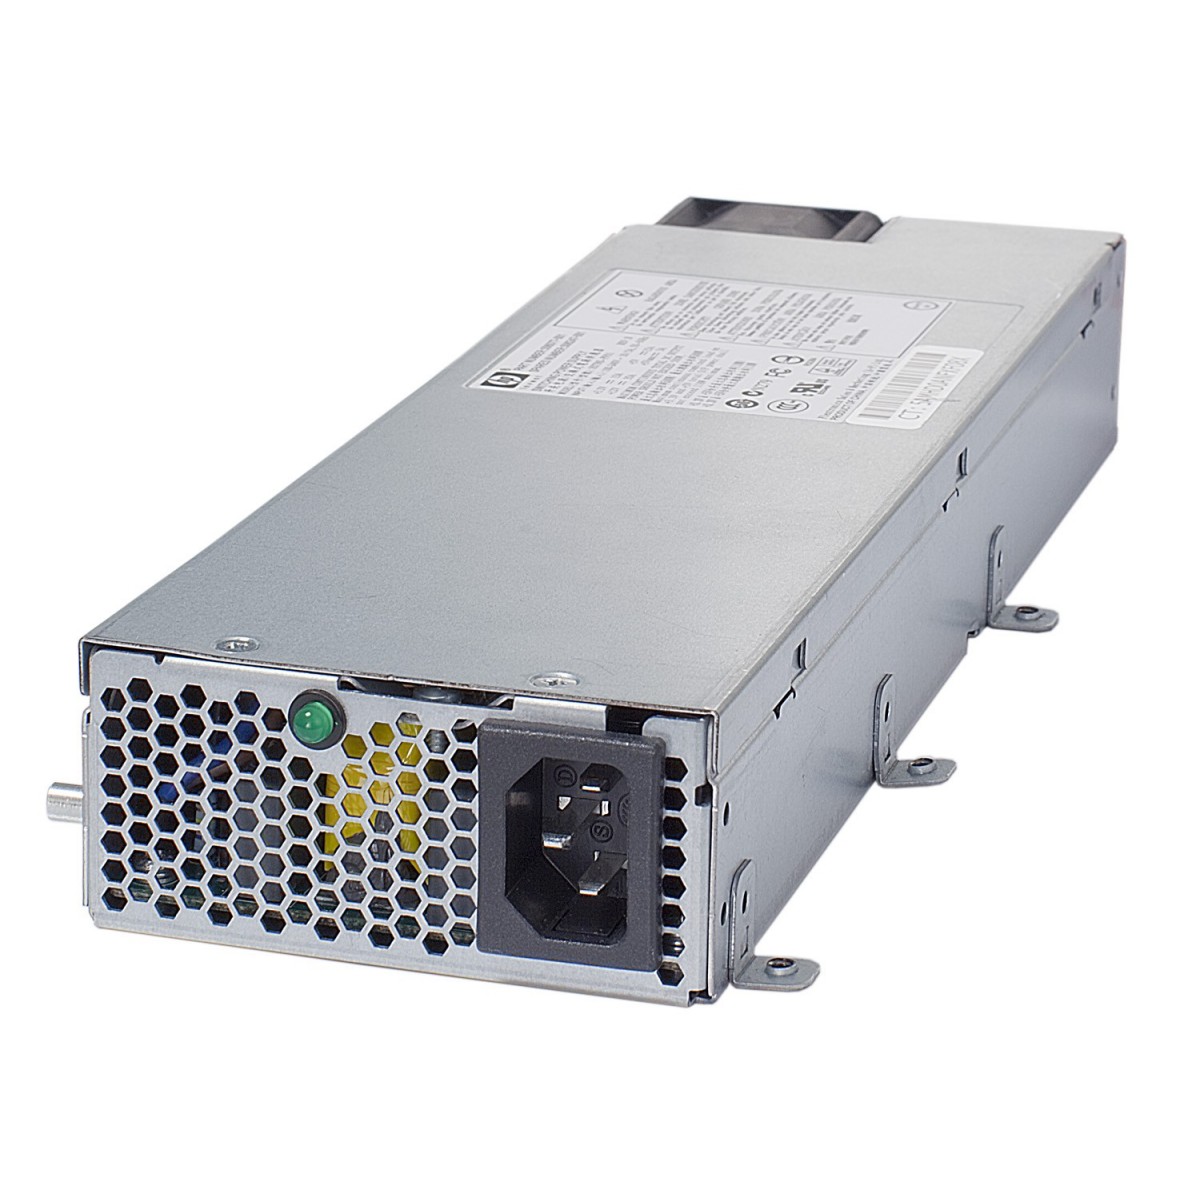 HPE 437572-B21 - 1200 W - 200 - 240 V - 50 - 60 Hz - server - Gray - 1 fan(s)